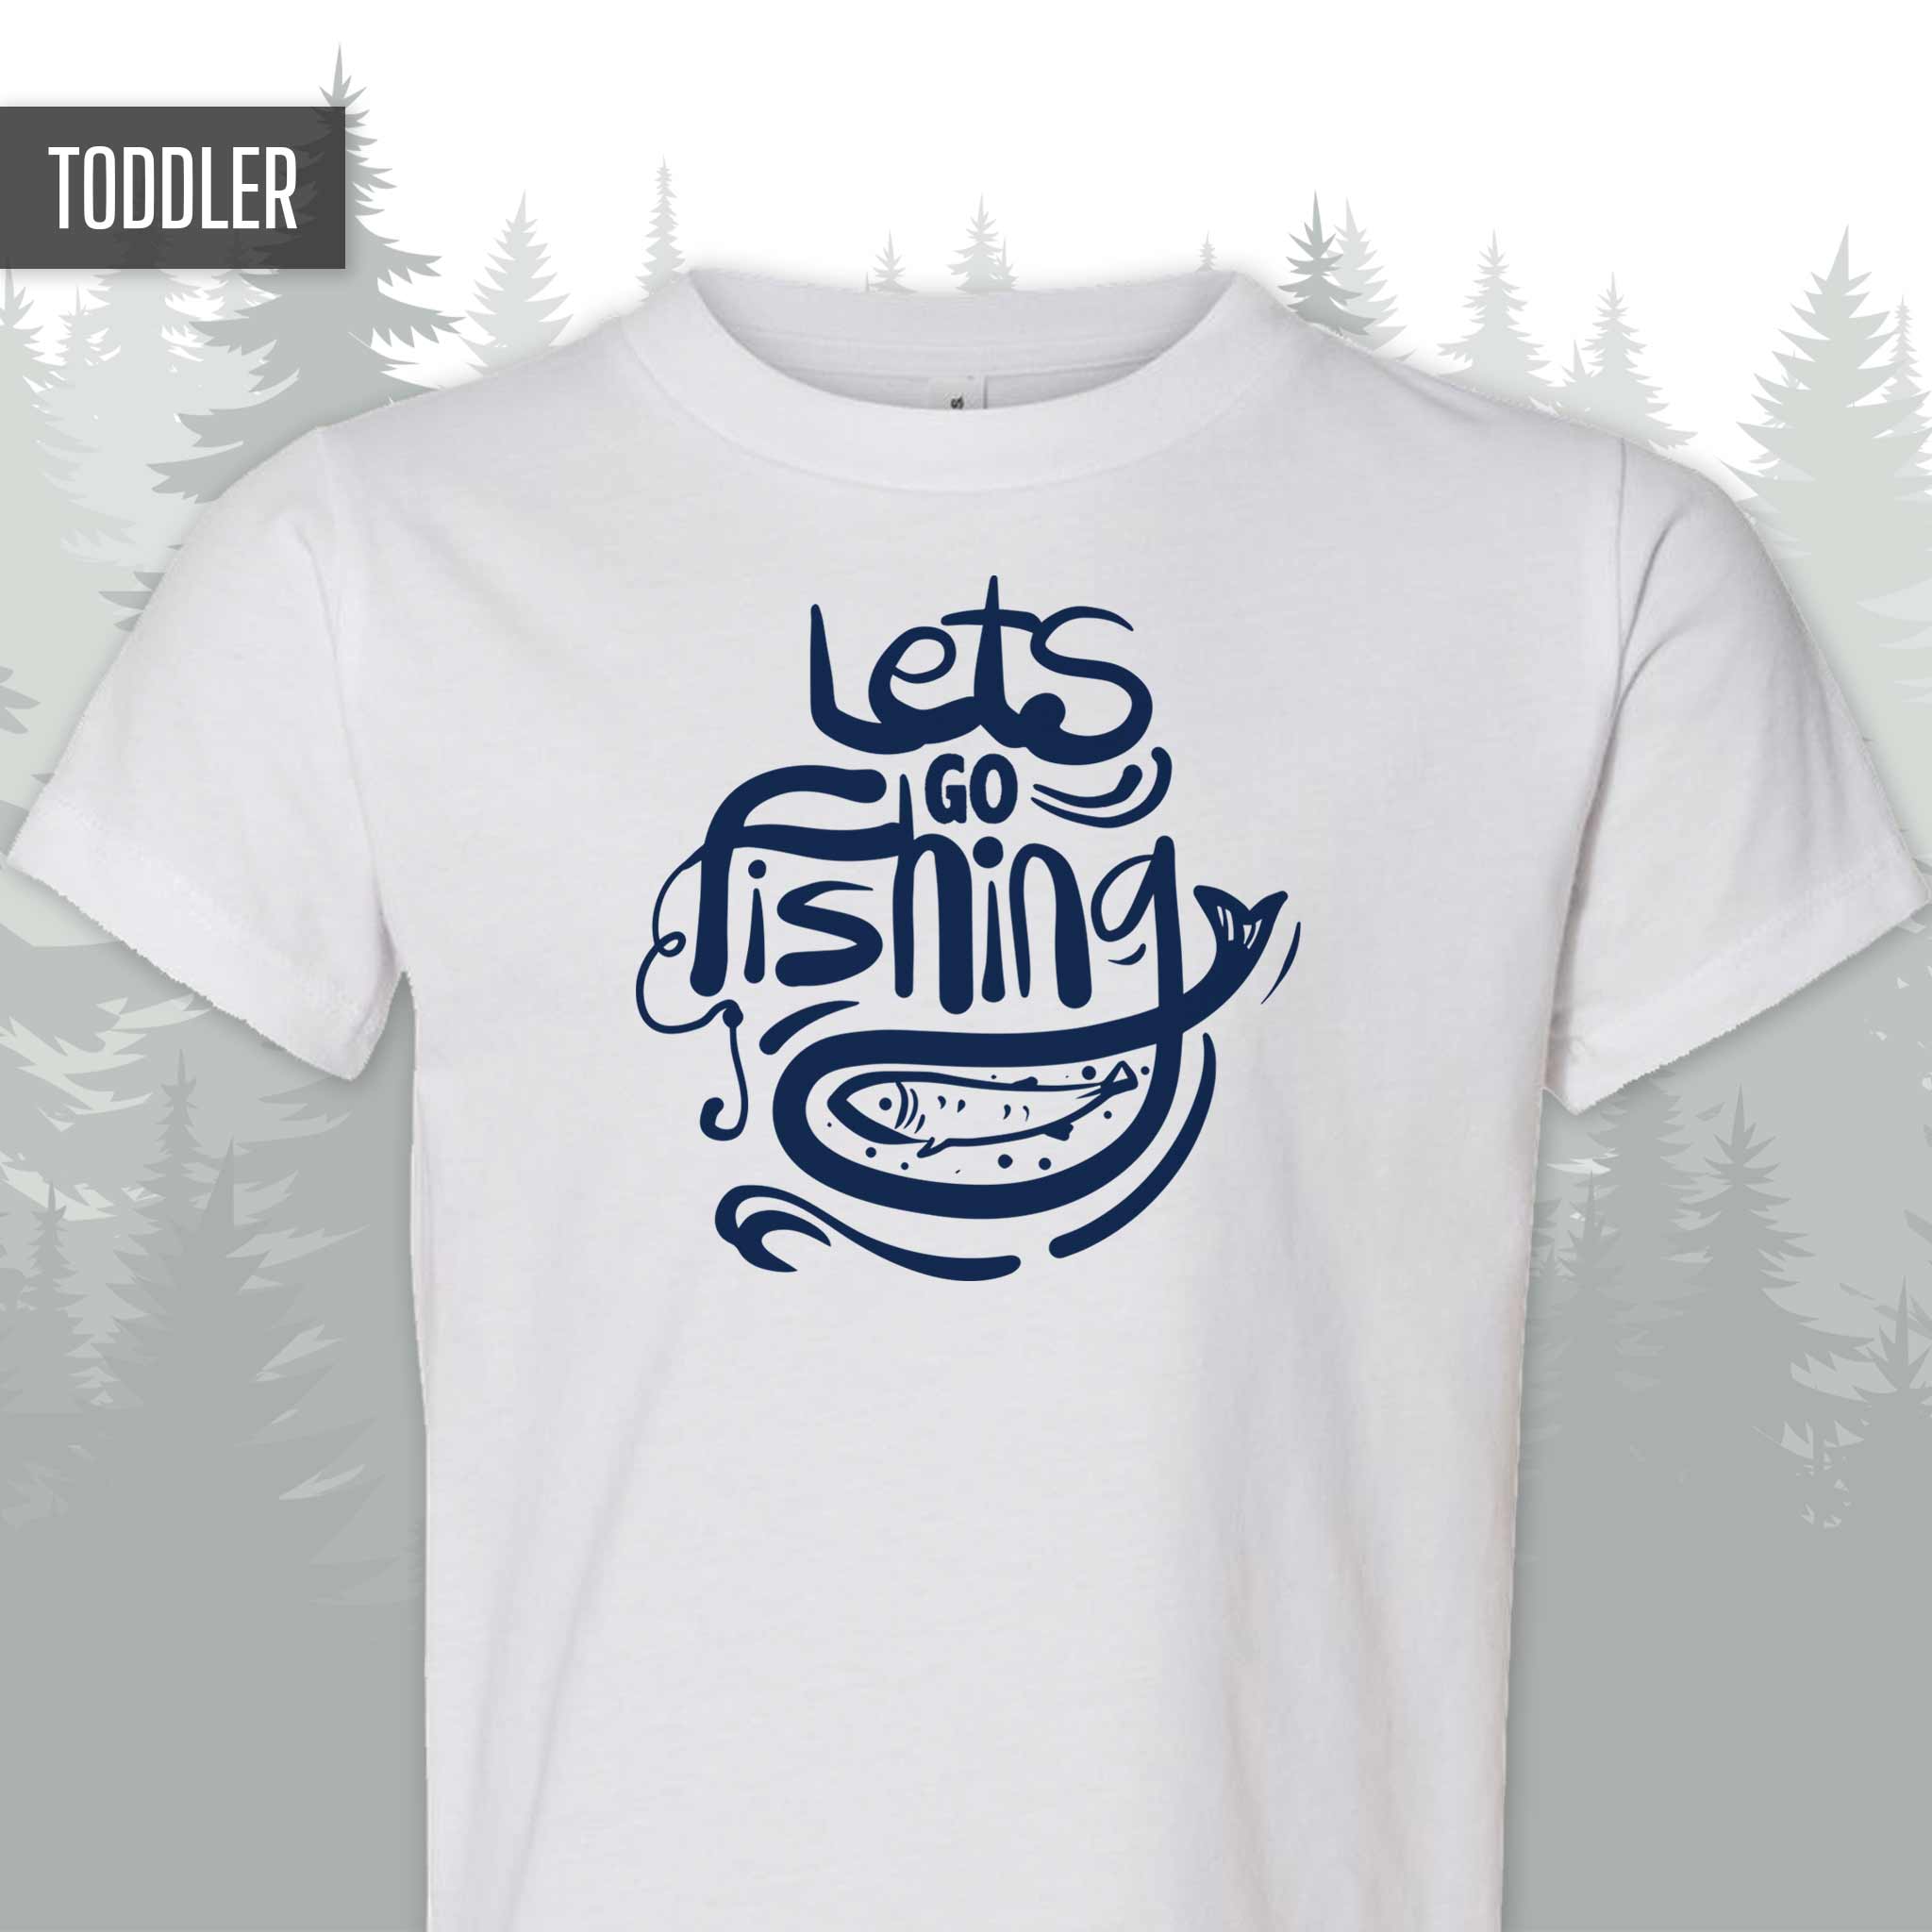 Let's Go Fishing Toddler T-Shirt - 12-18M T-Shirt / White